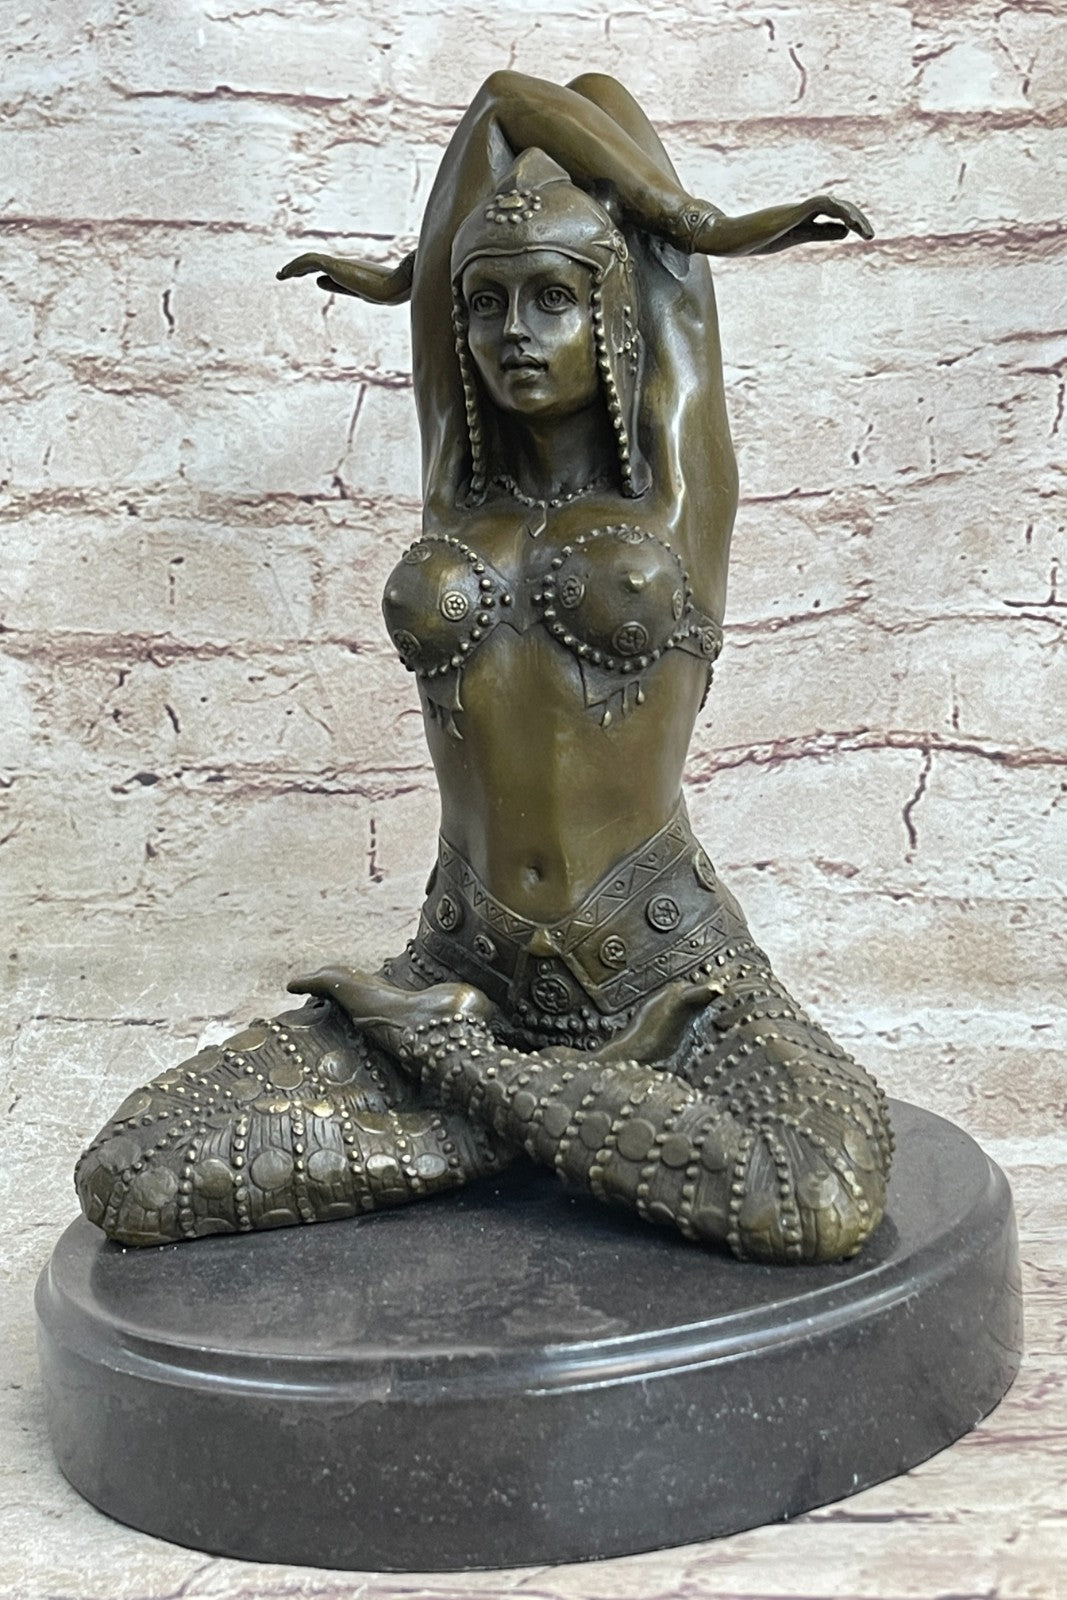 Handcrafted bronze sculpture SALE Art Meditation Yoga Lady Lost Wax Method